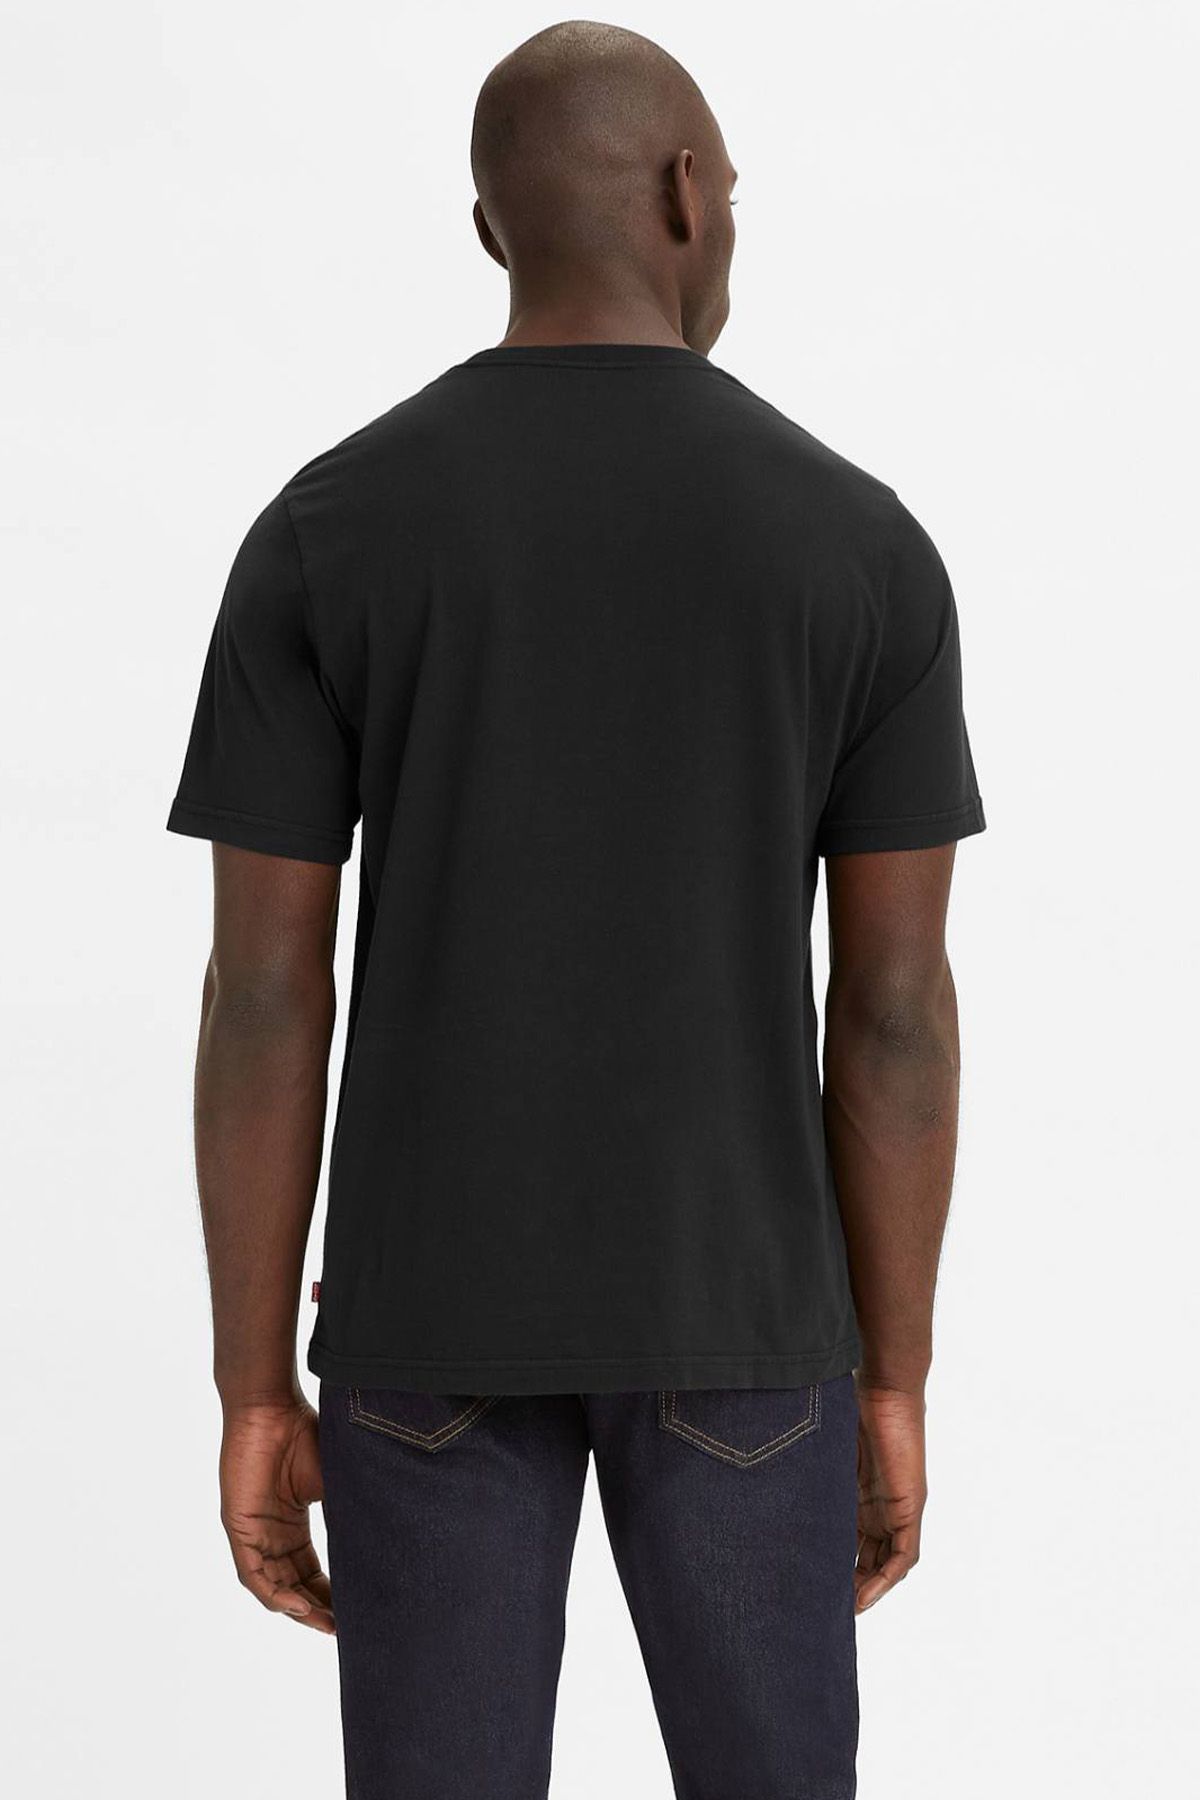 Levi's® Men's Relaxed Fit Short Sleeve Graphic T-Shirt Black Men T-Shirts